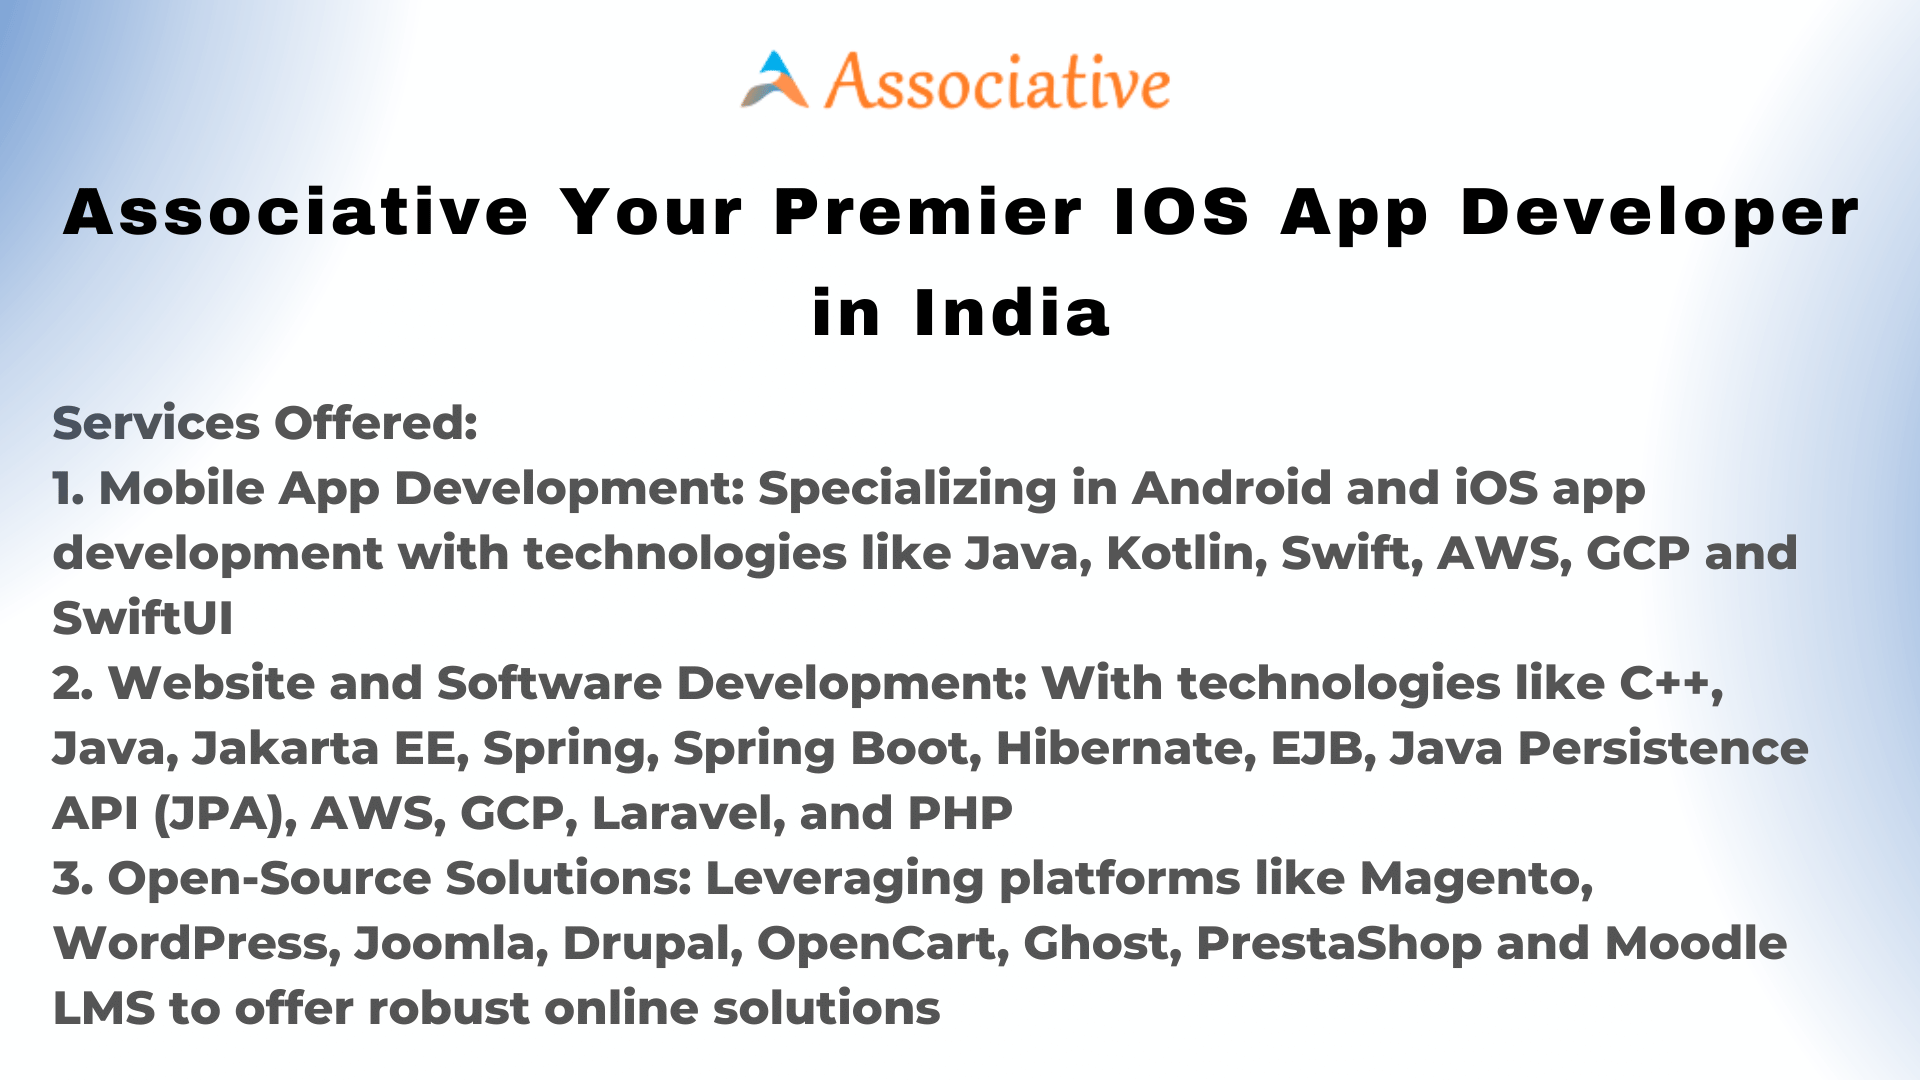 Associative Your Premier iOS App Developer in India